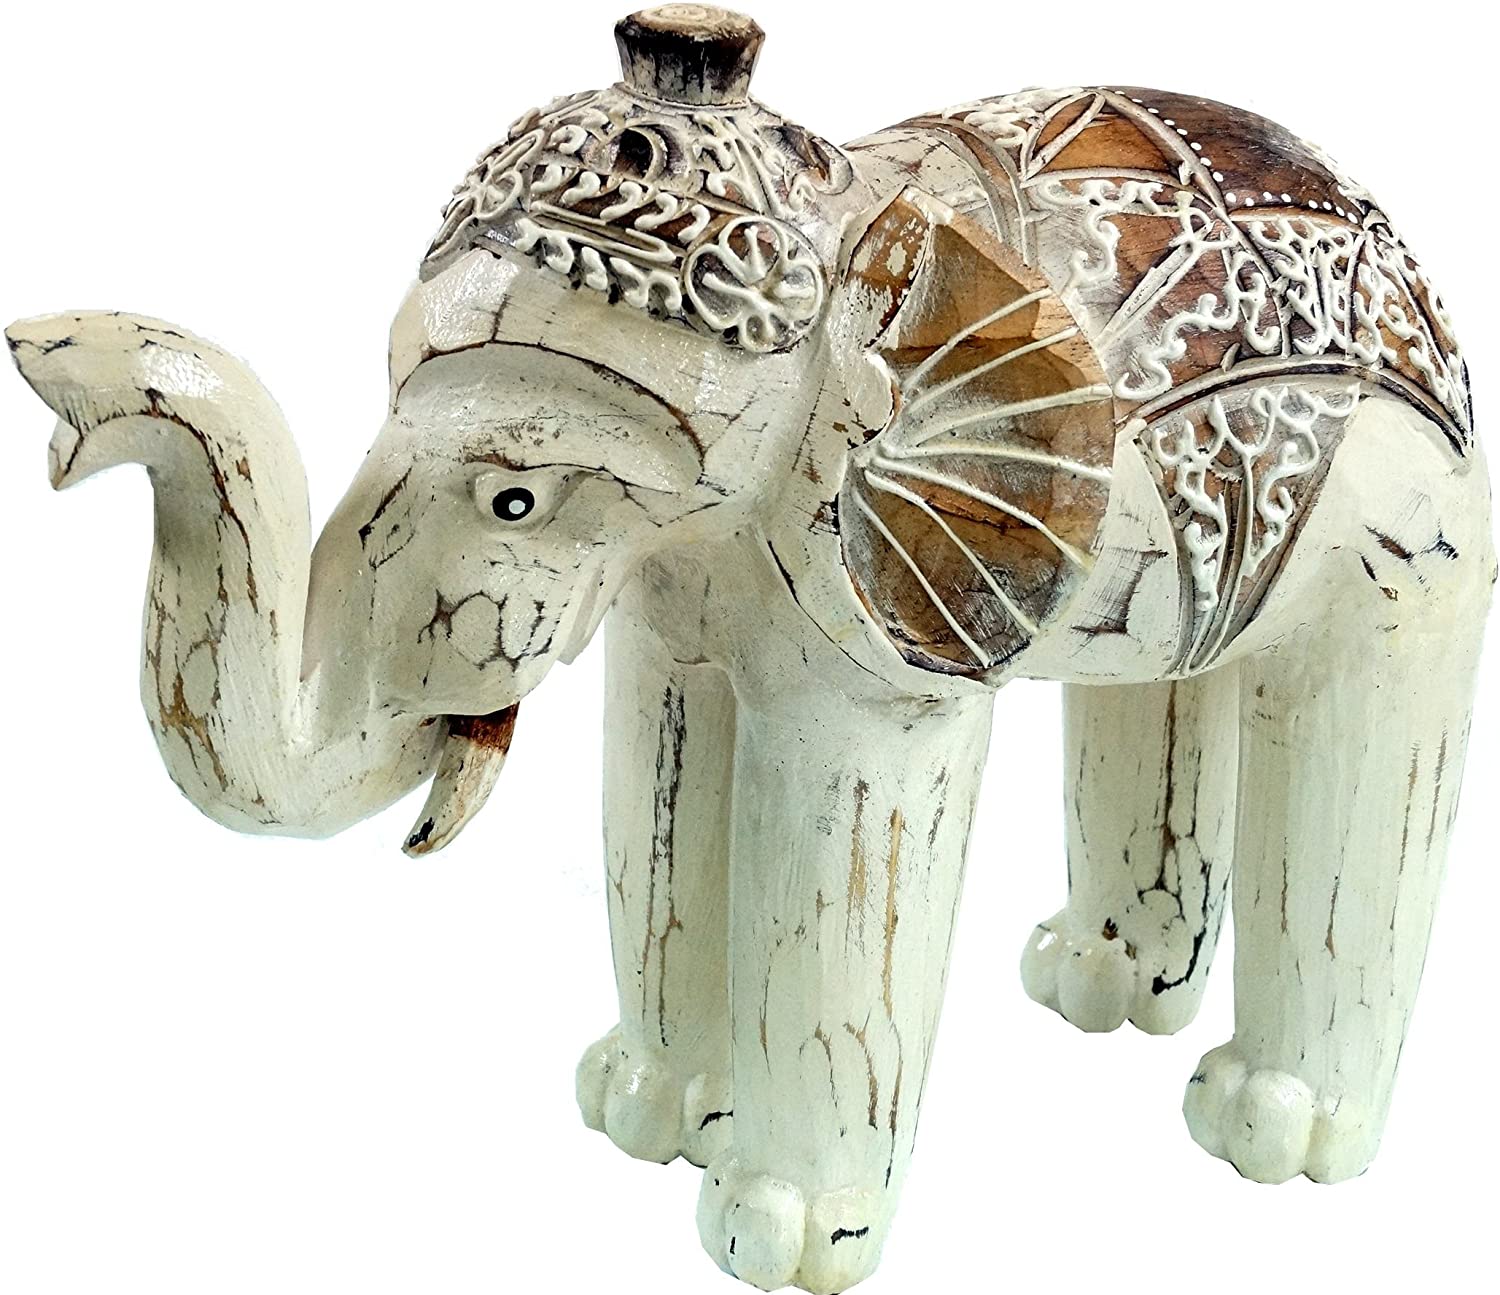 Guru-Shop Carved Elephant in 3 Sizes – White, Wood, Size: Small (15 x 17 x 7 cm), Animal Figures